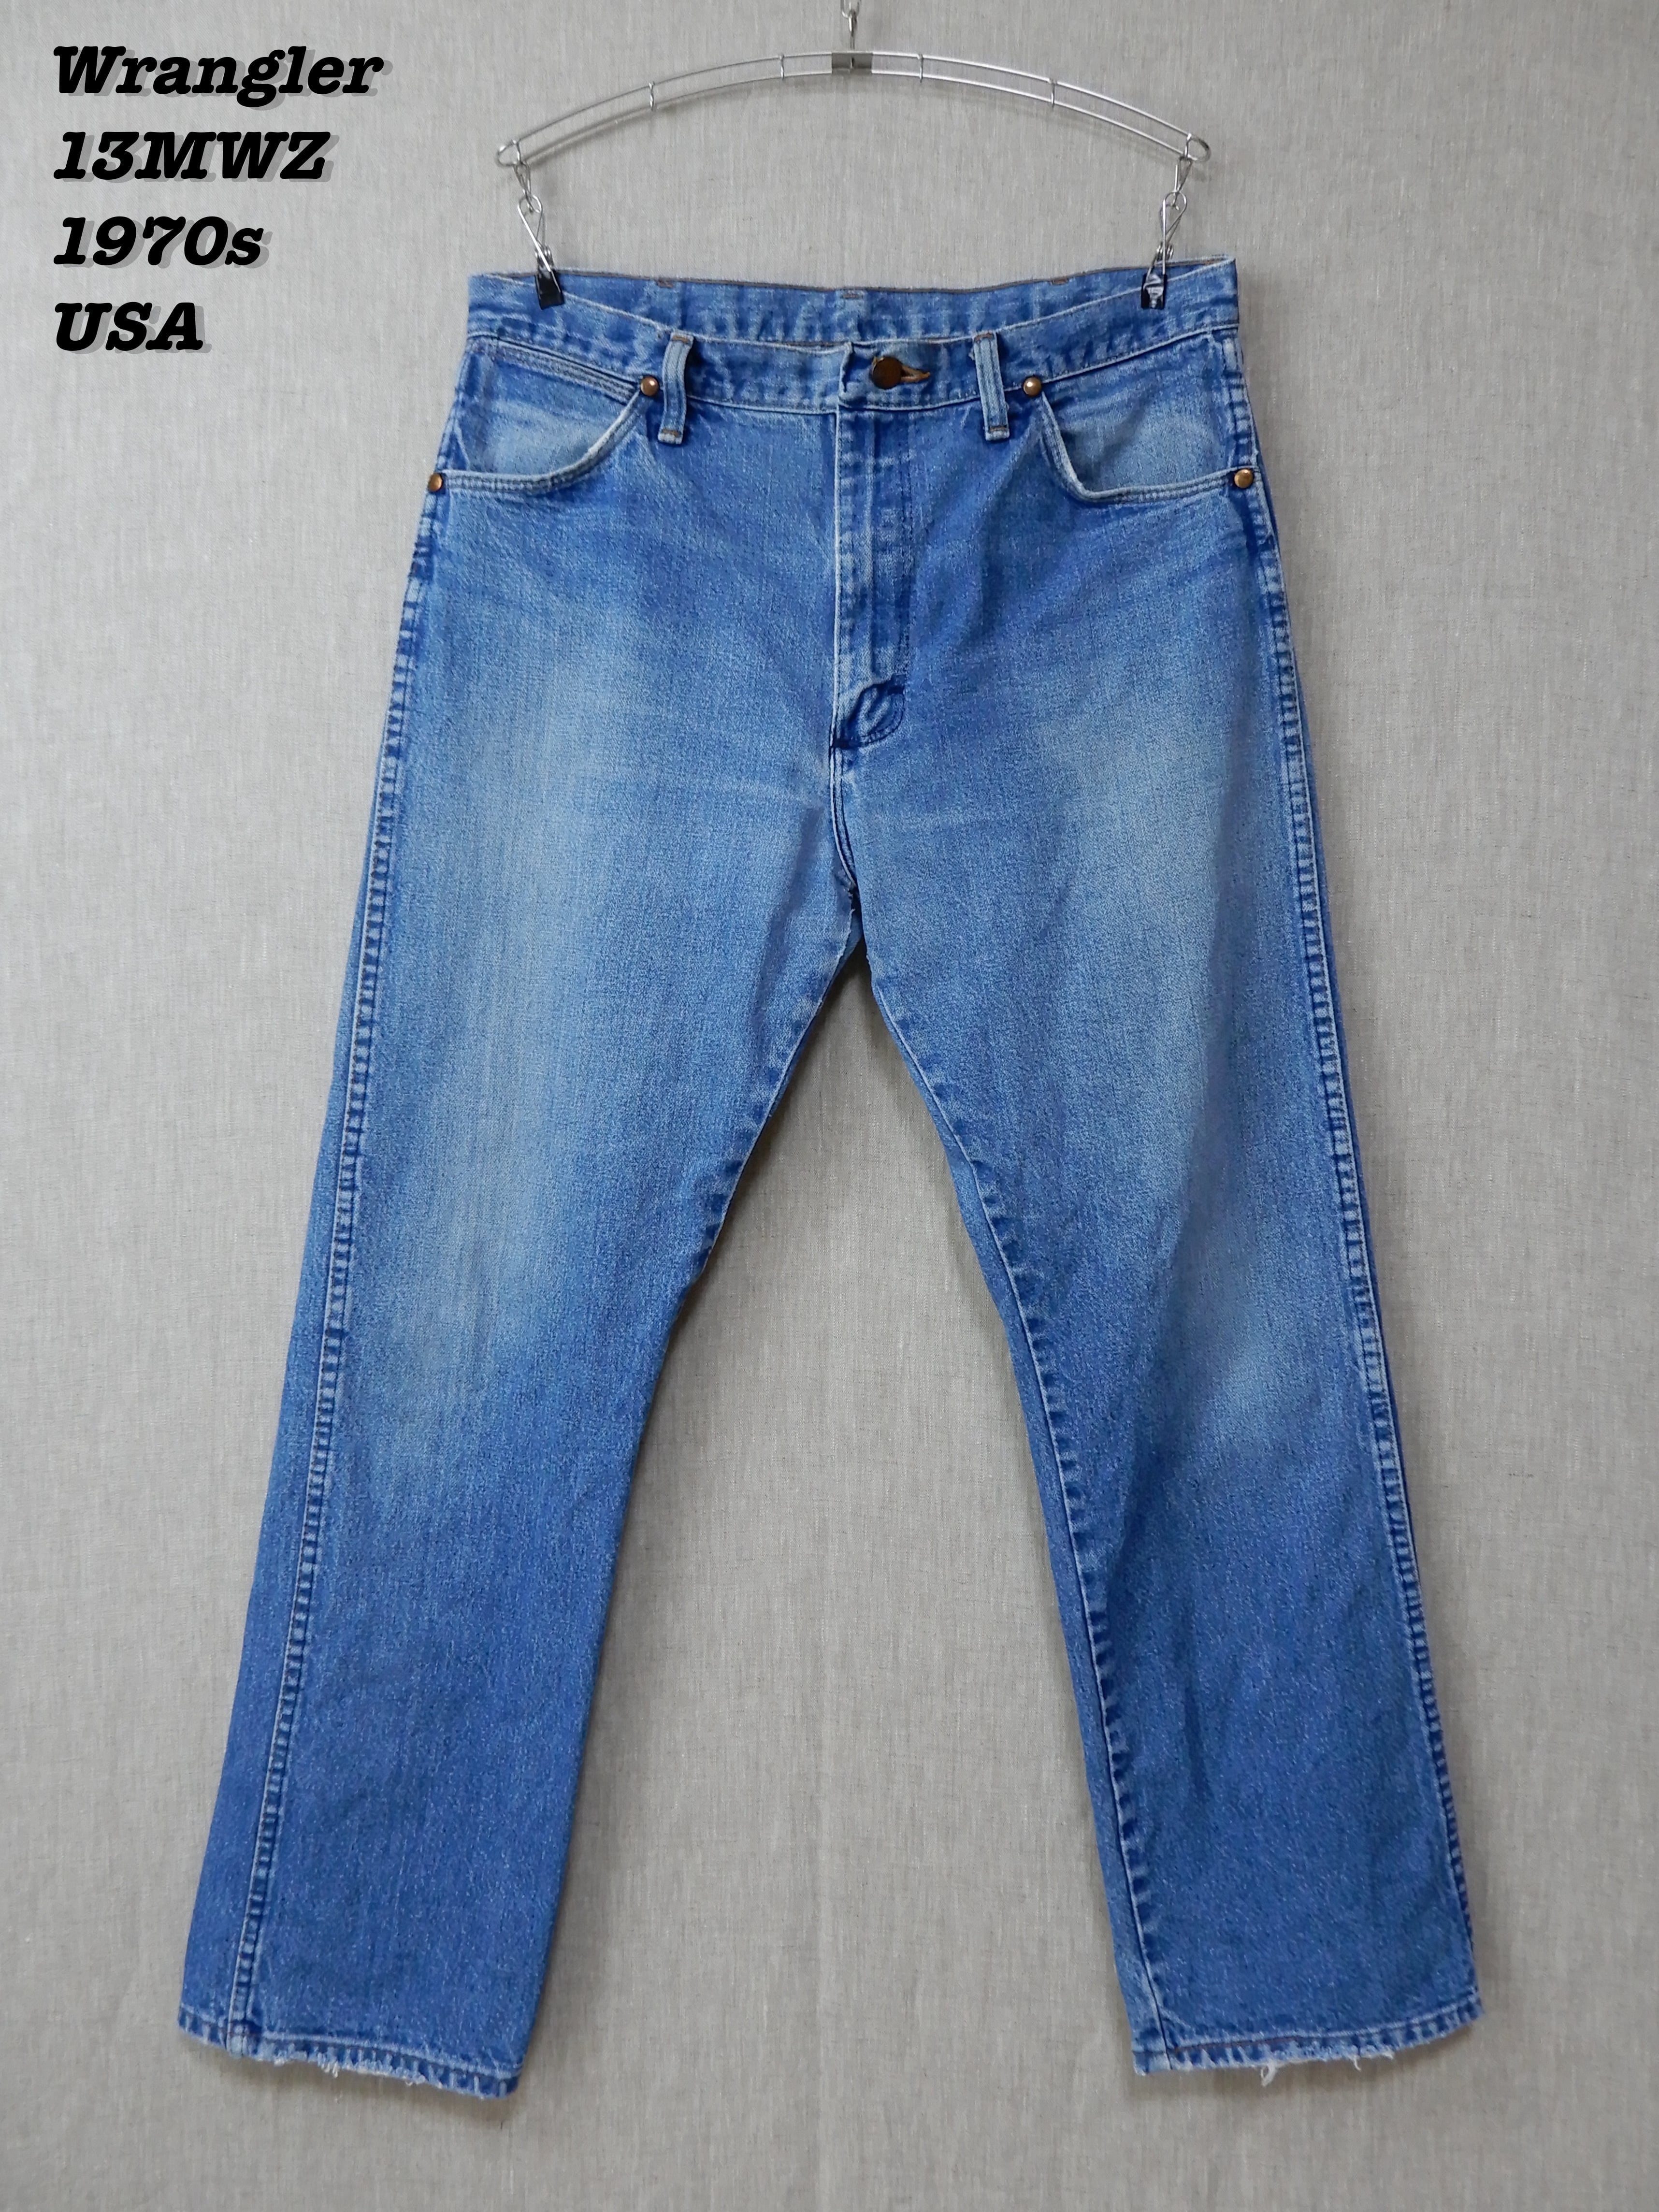 Wrangler 13MWZ Indigo Denim Pants 1970s Made in USA W36 L30